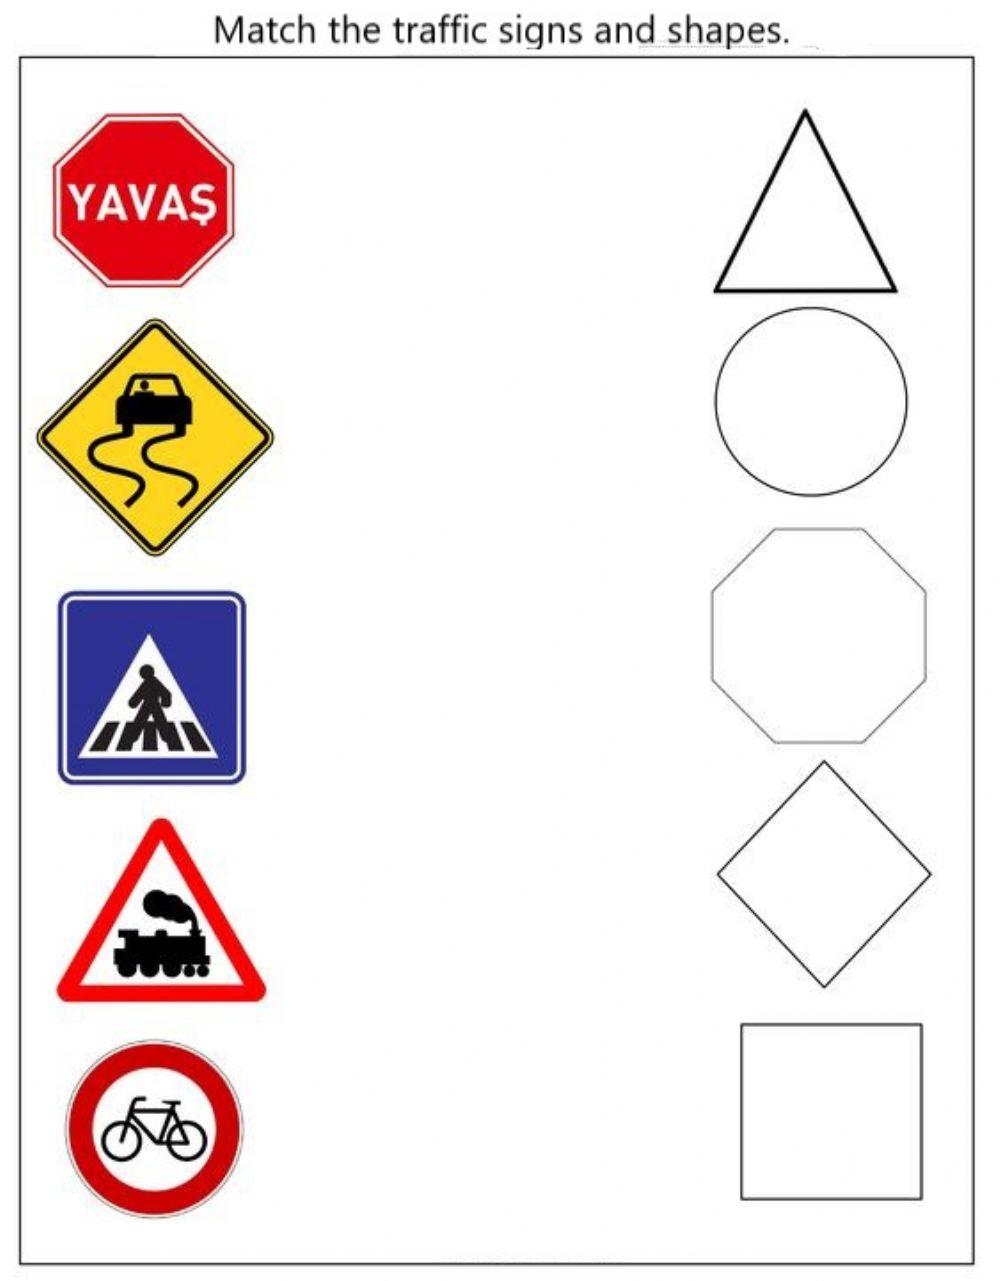 Traffic shapes